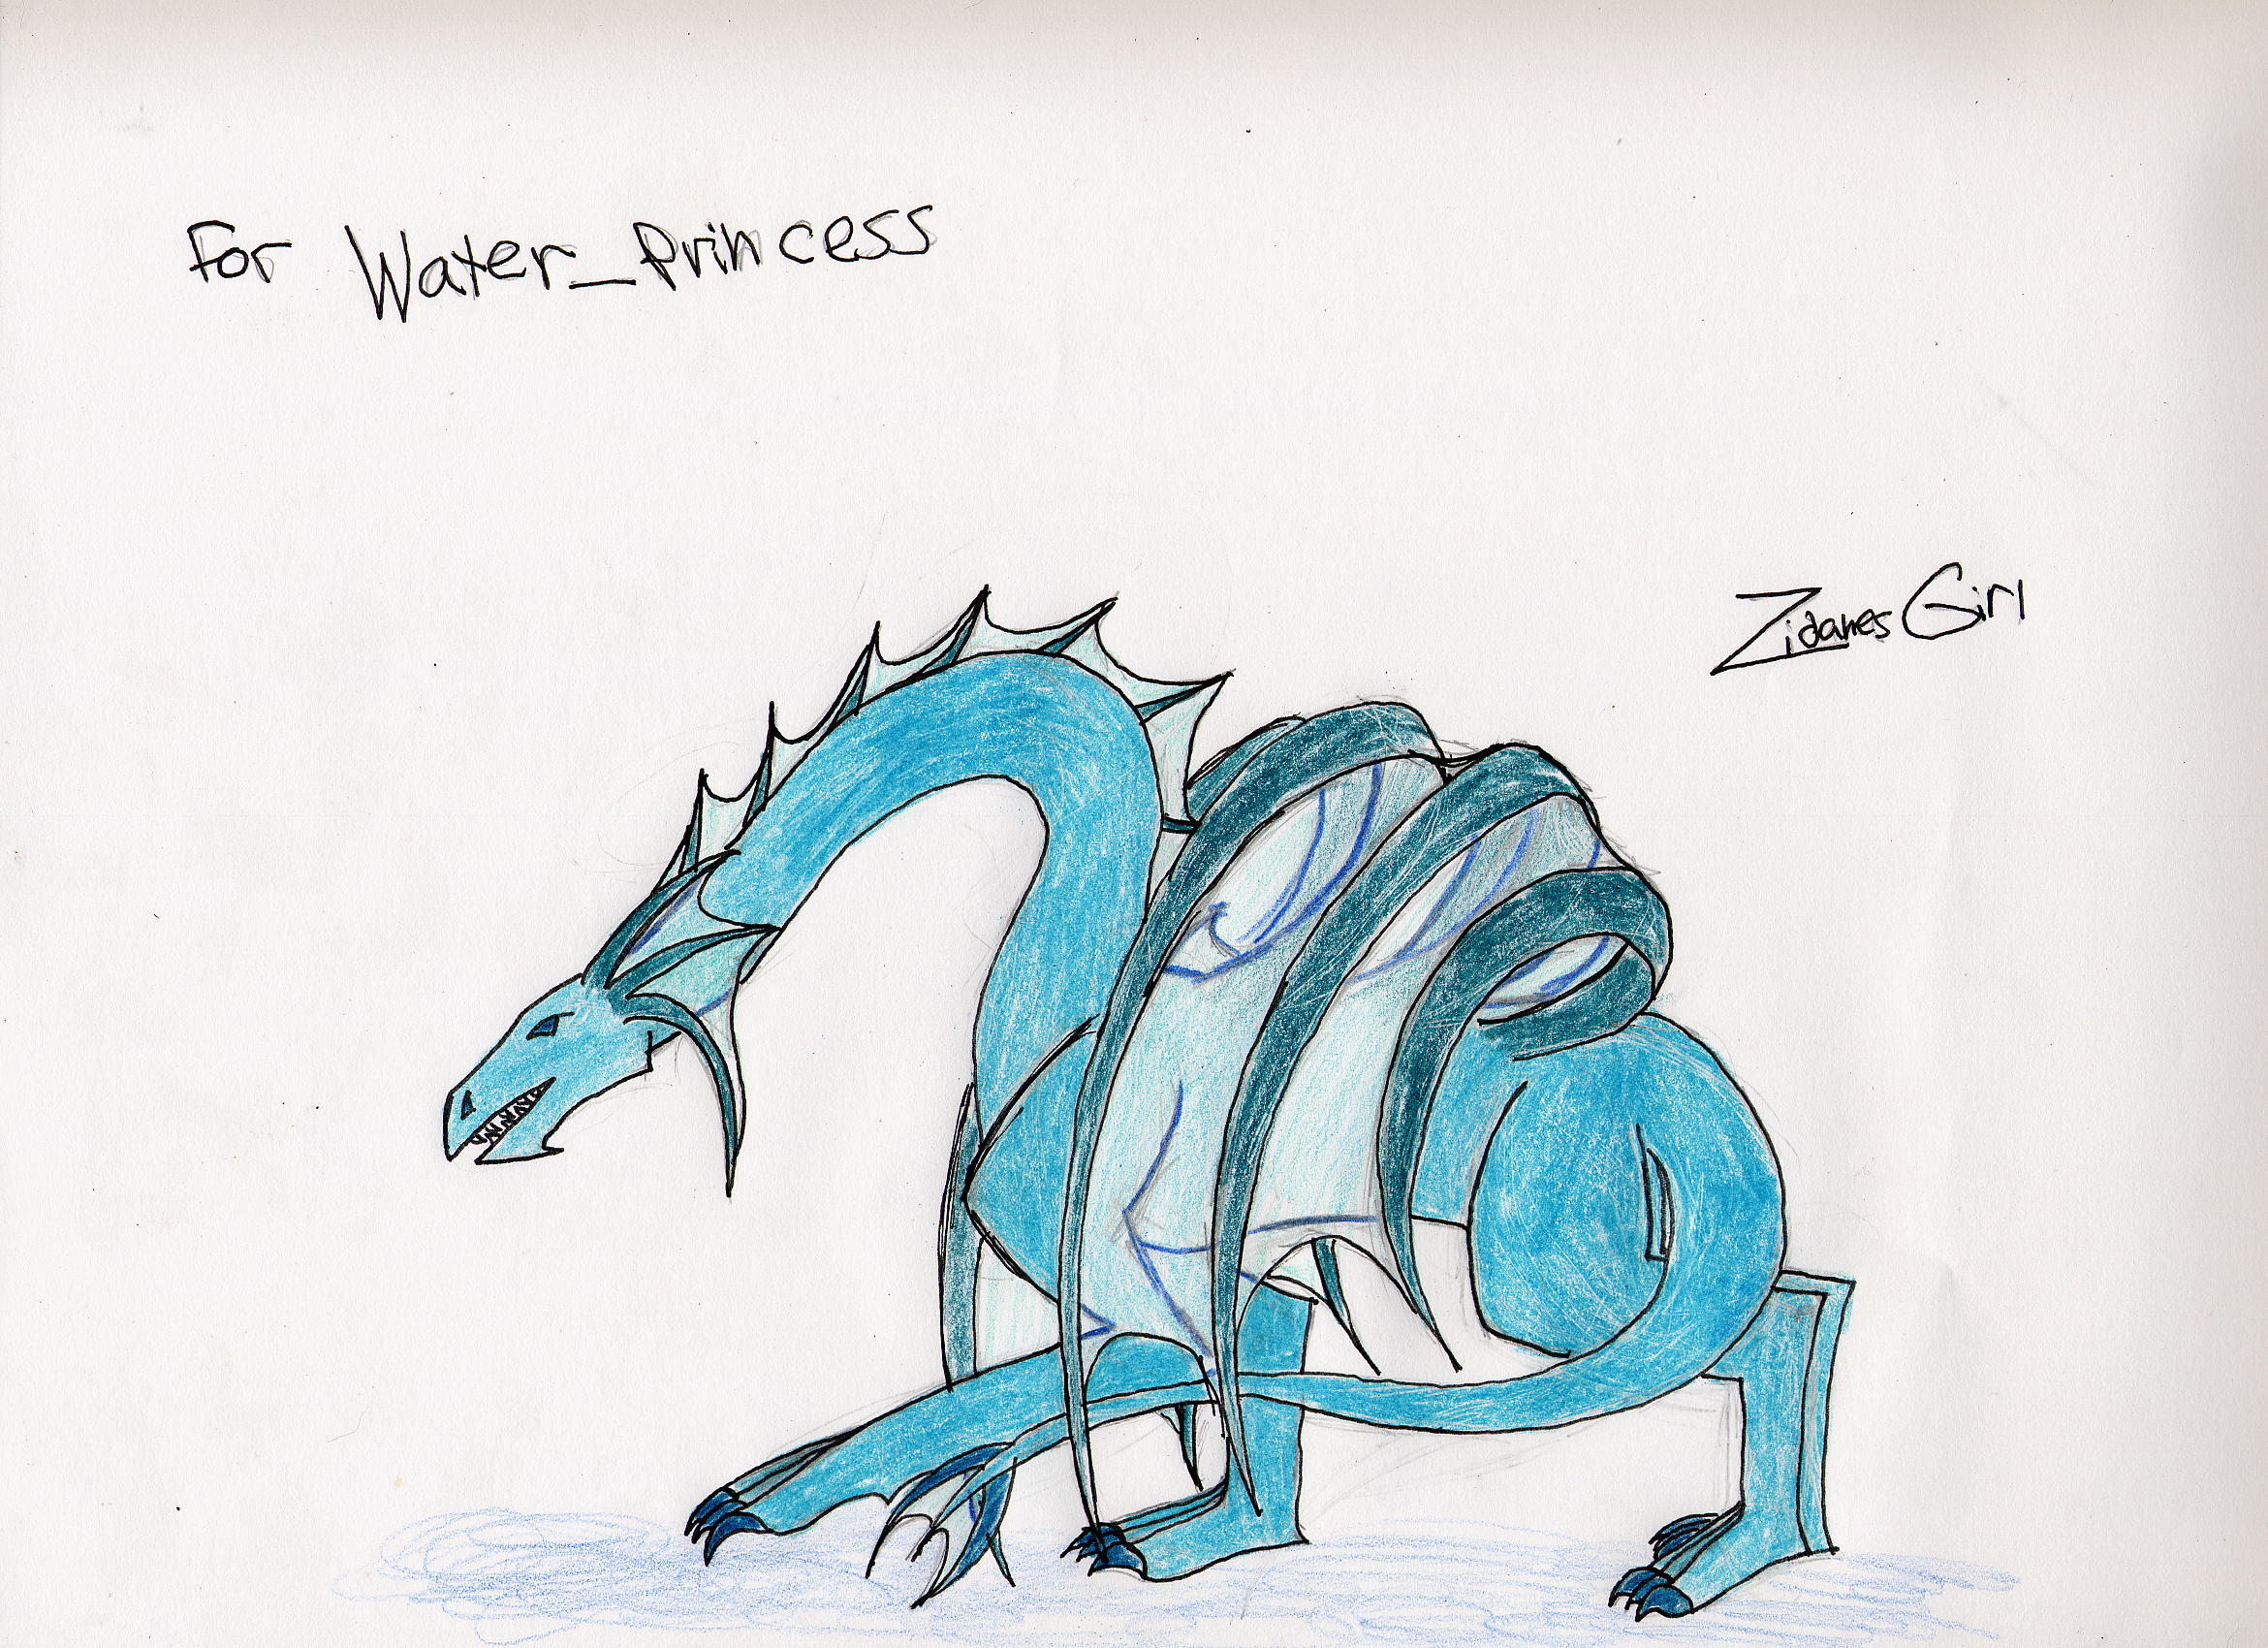 Water Dragon for Water_Princess by ZidanesGirl